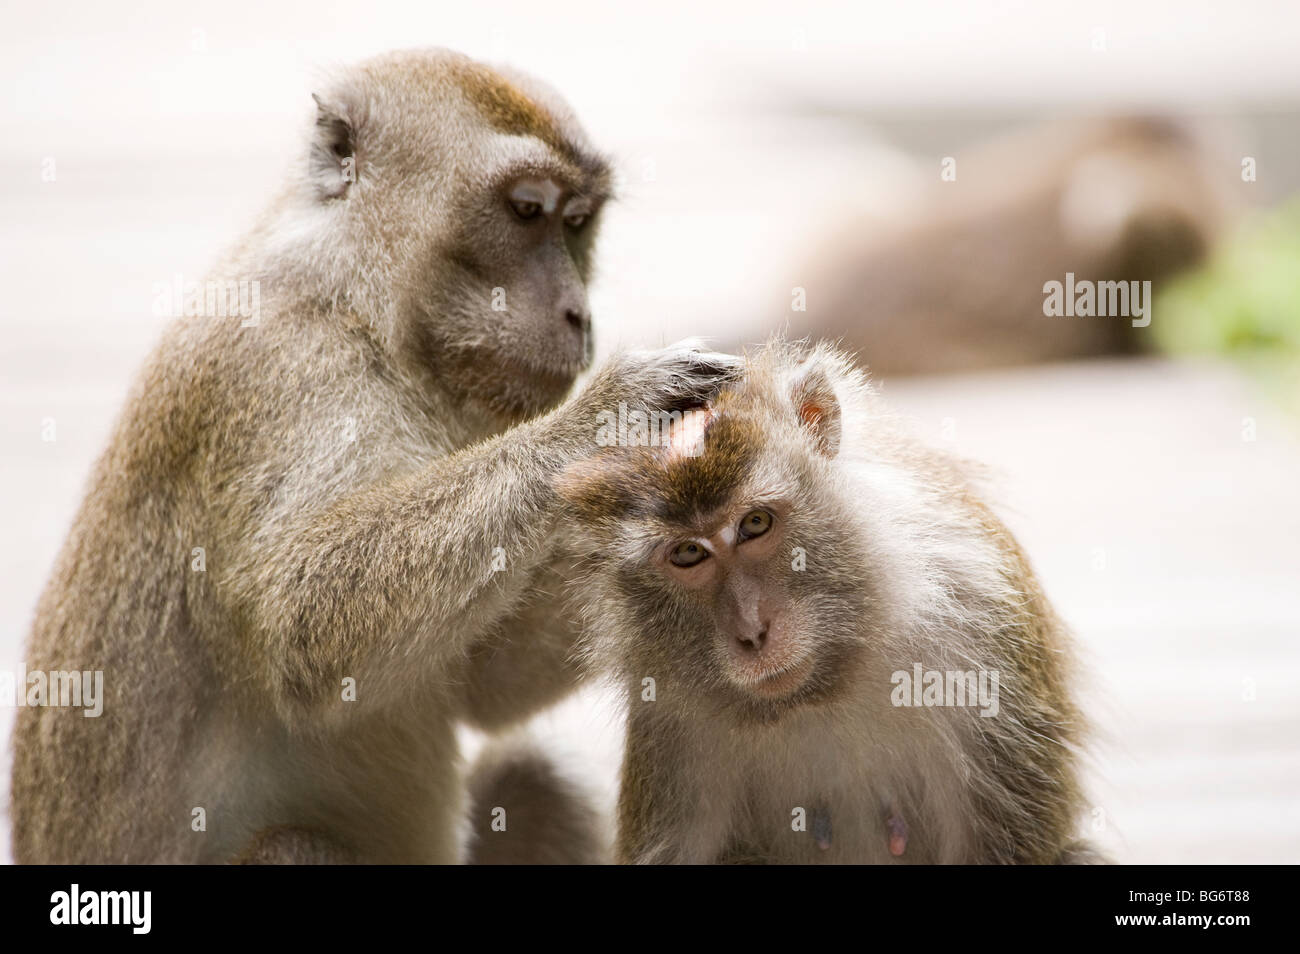 Lunga coda Macaque monkey in Tanjung messa national park, Borneo Foto Stock